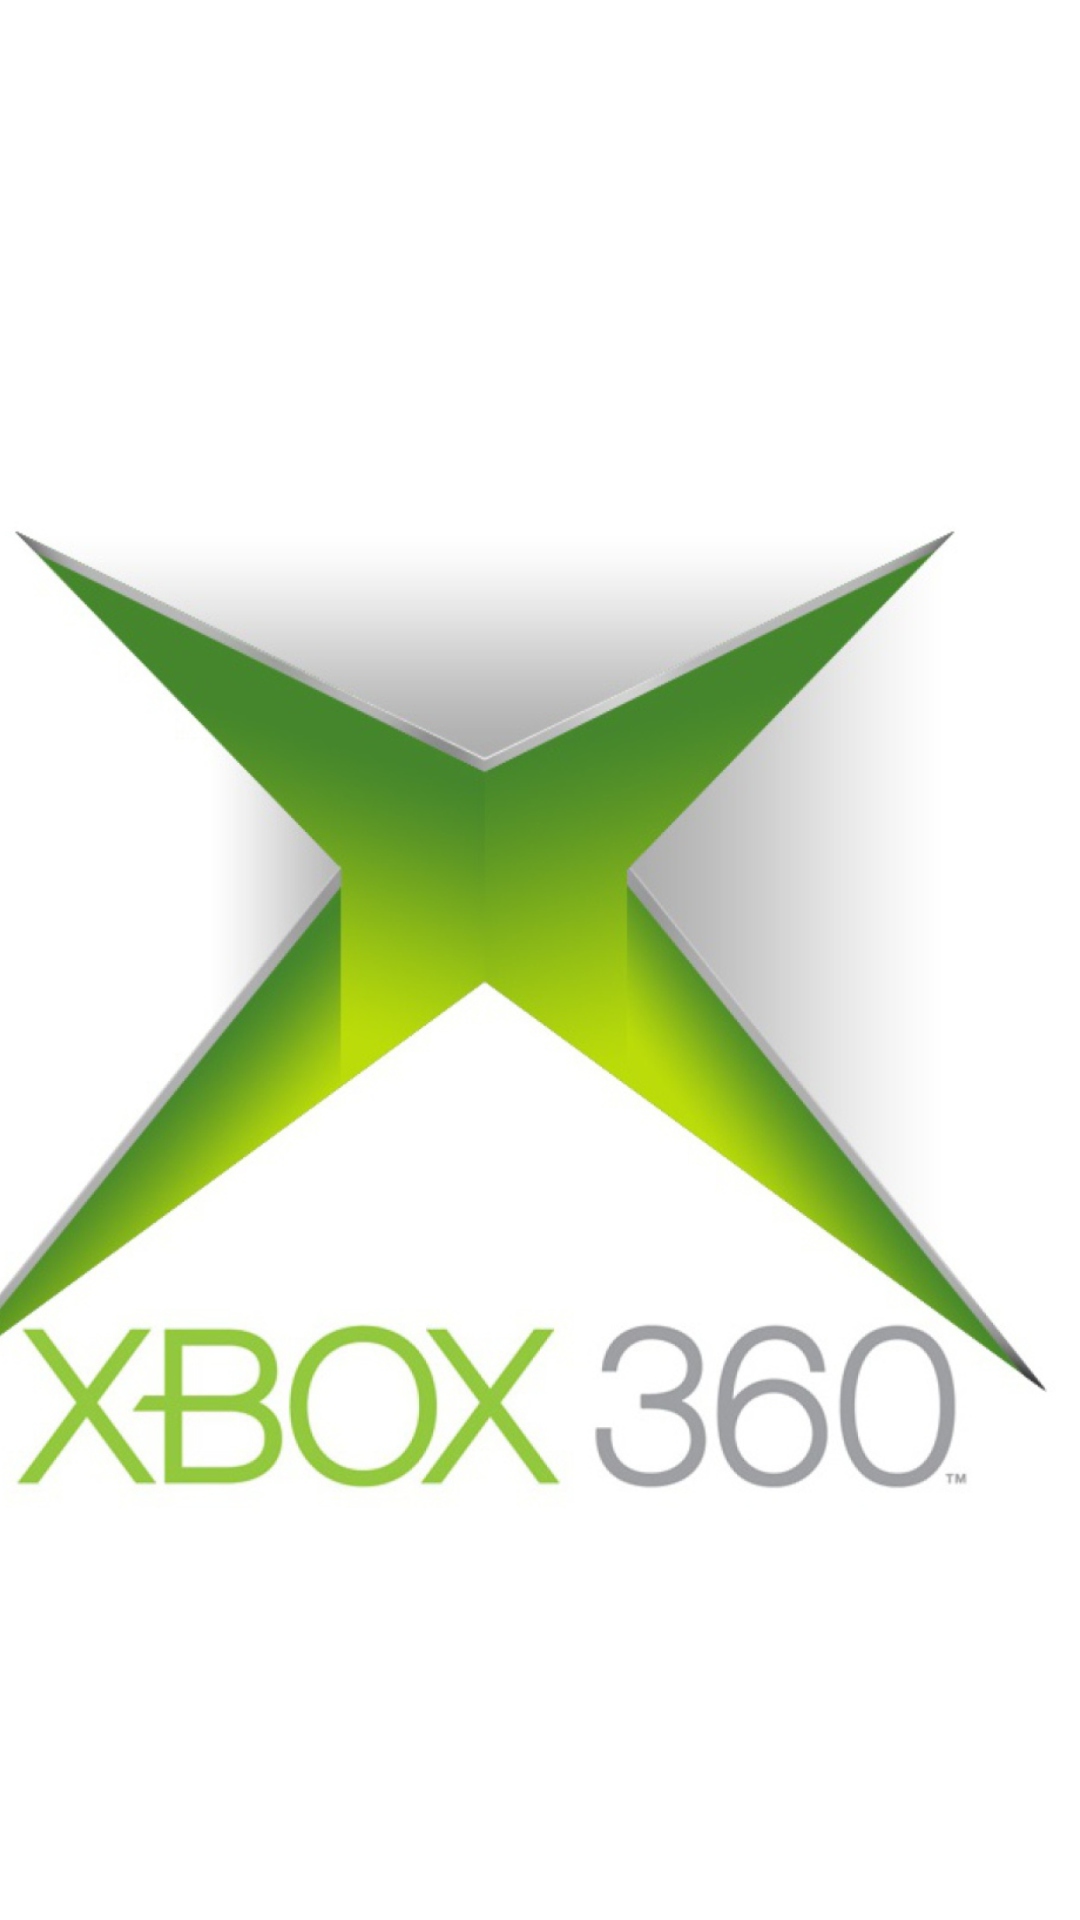 Xbox 360 wallpaper 1080x1920